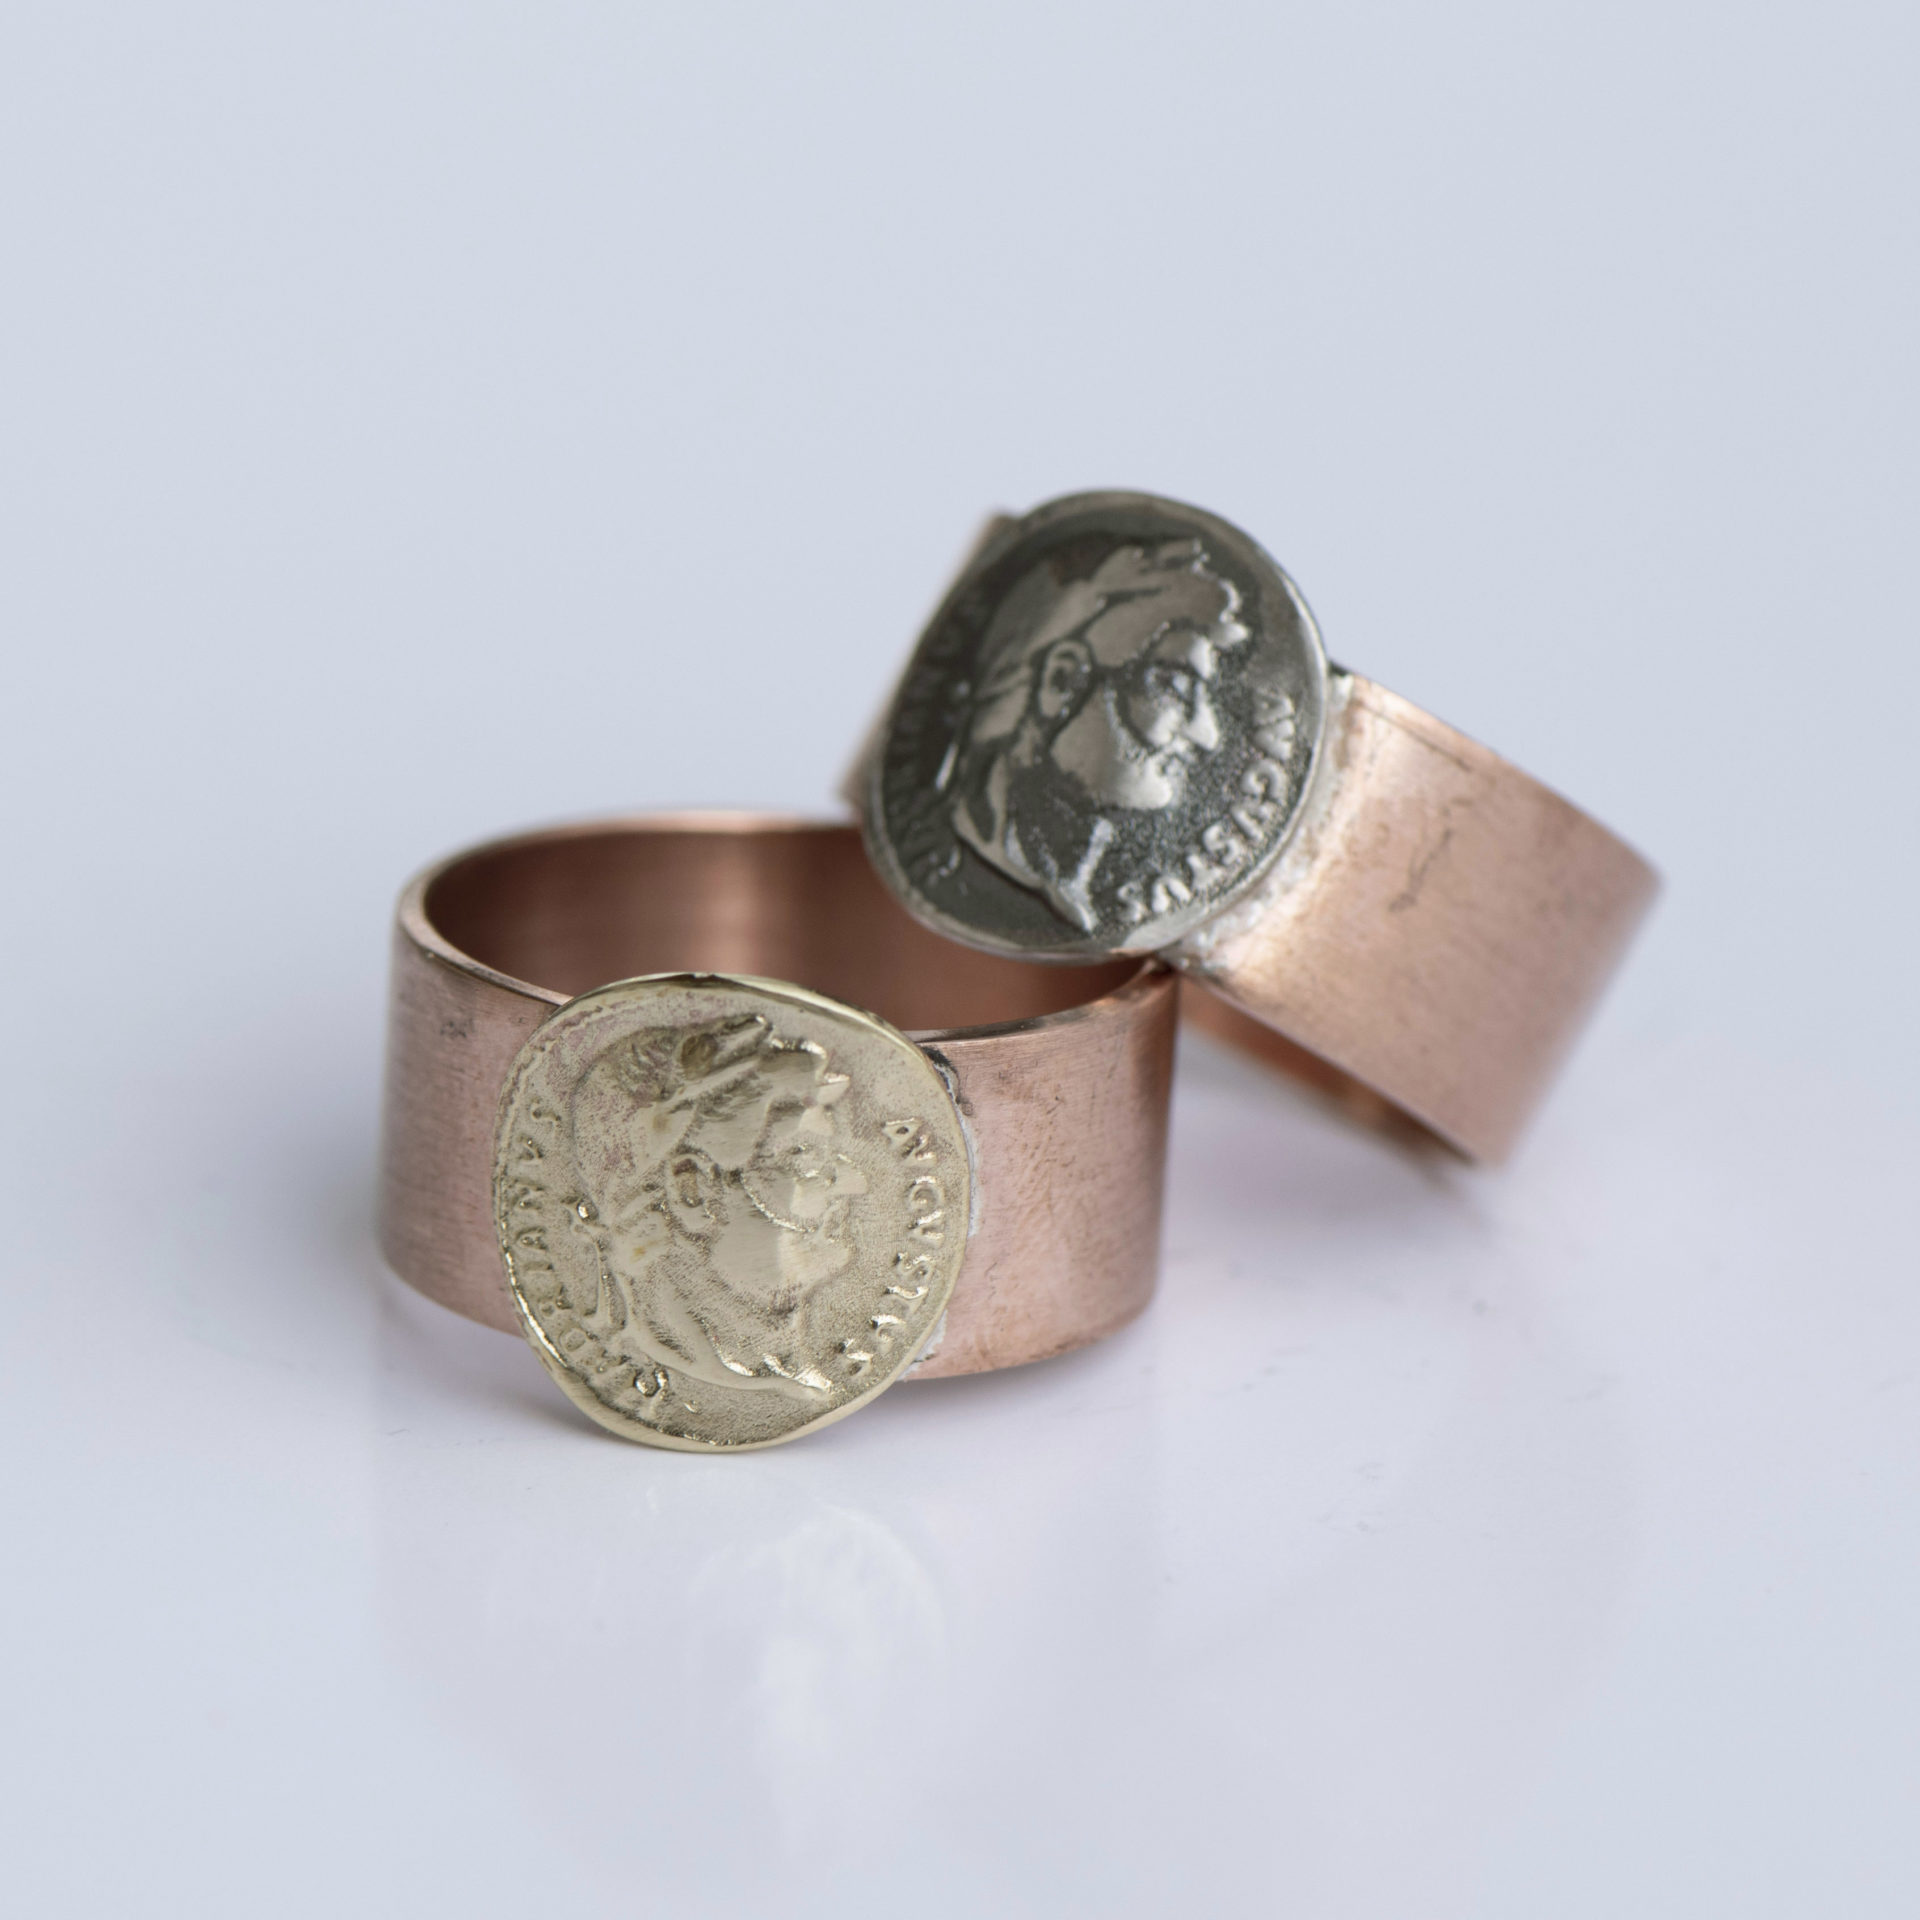 pierscionki coins miedz antyczna moneta grecka bizuteria galeria ora 3